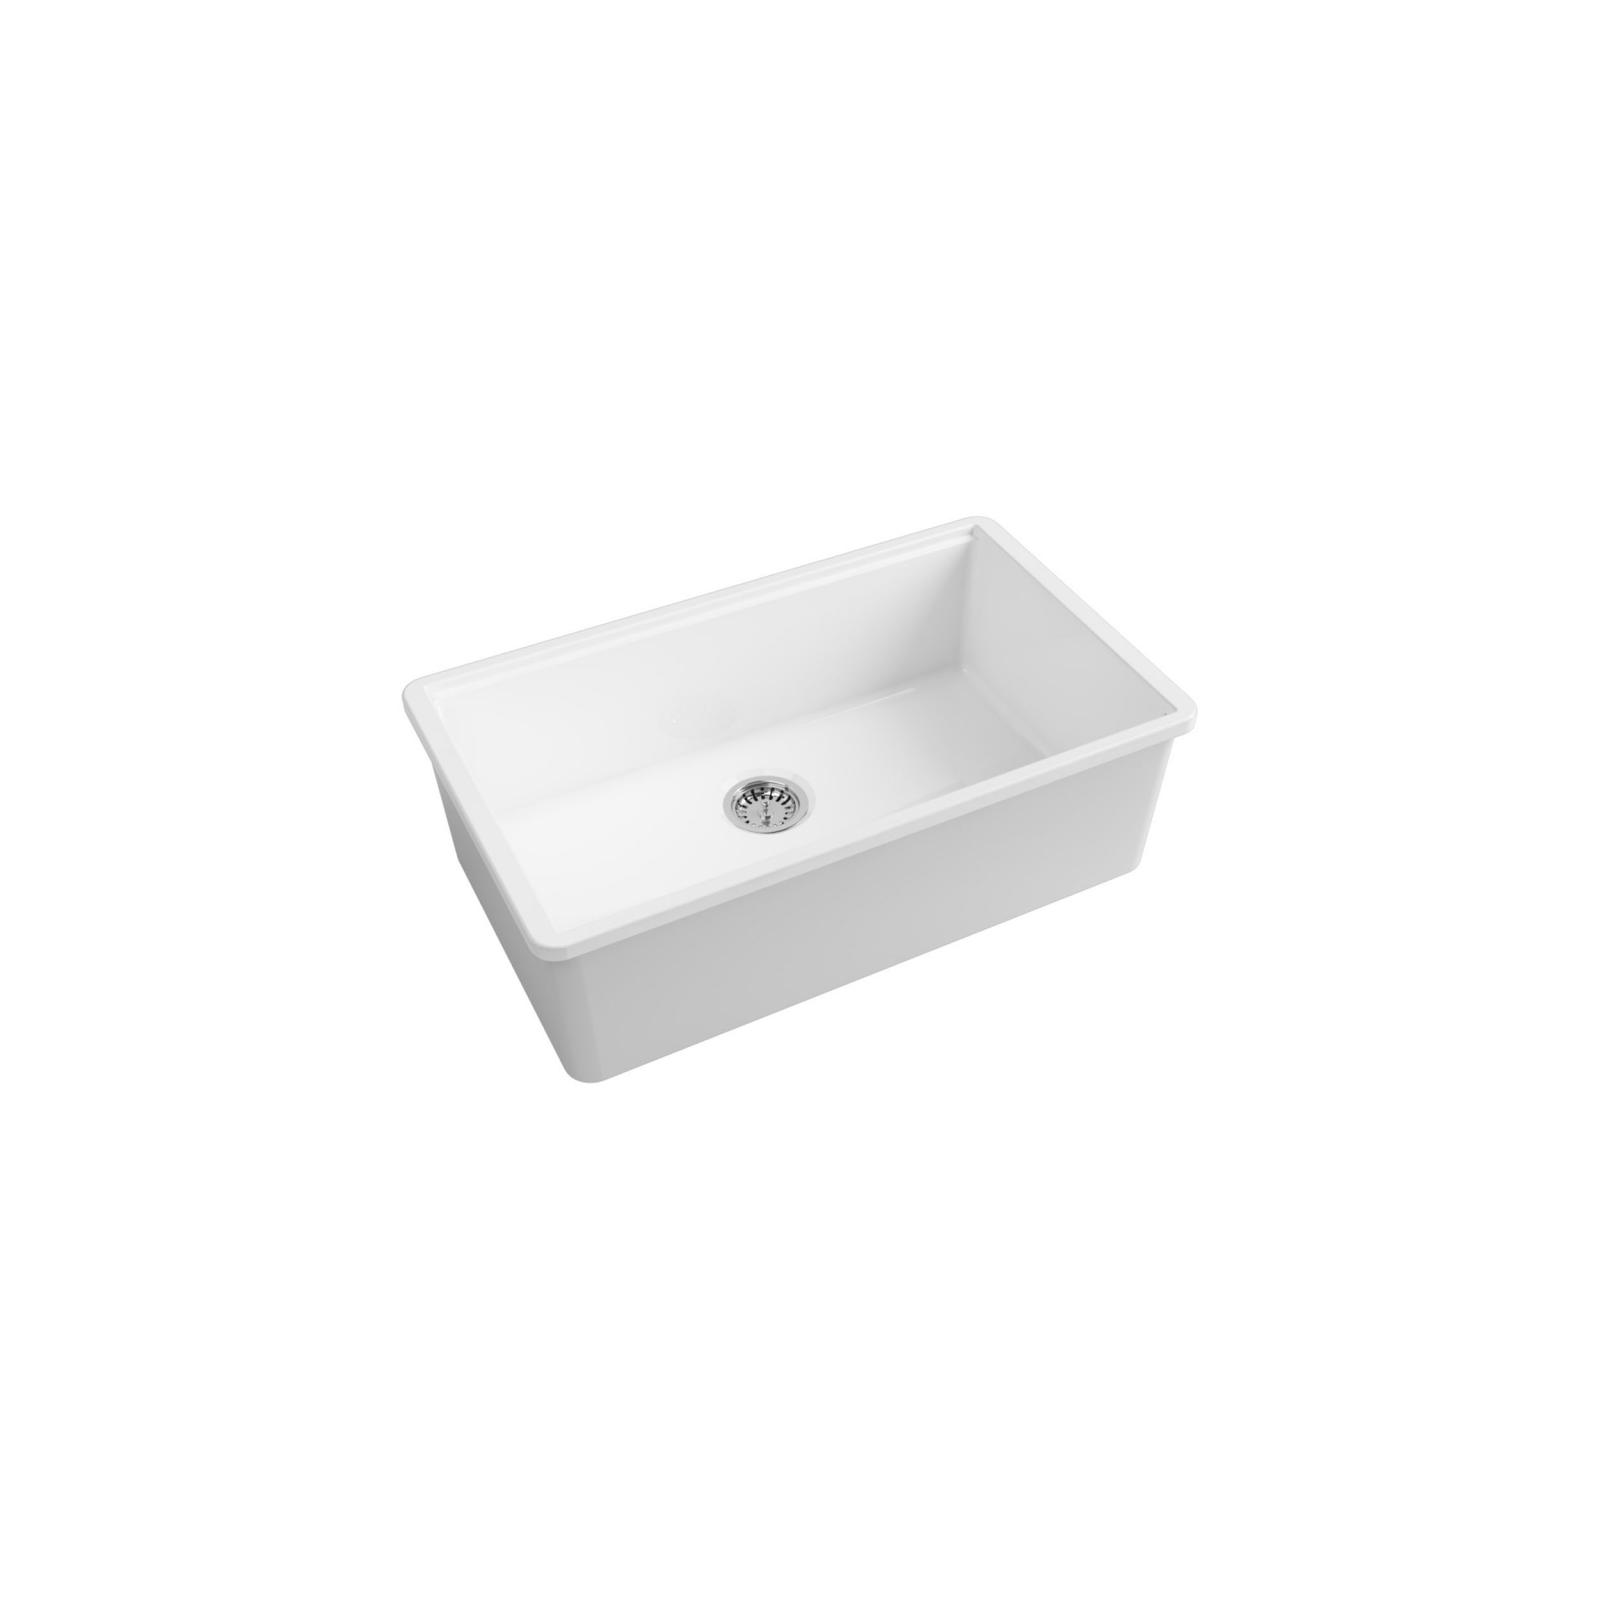 High-quality sink Anne white - single bowl, ceramic